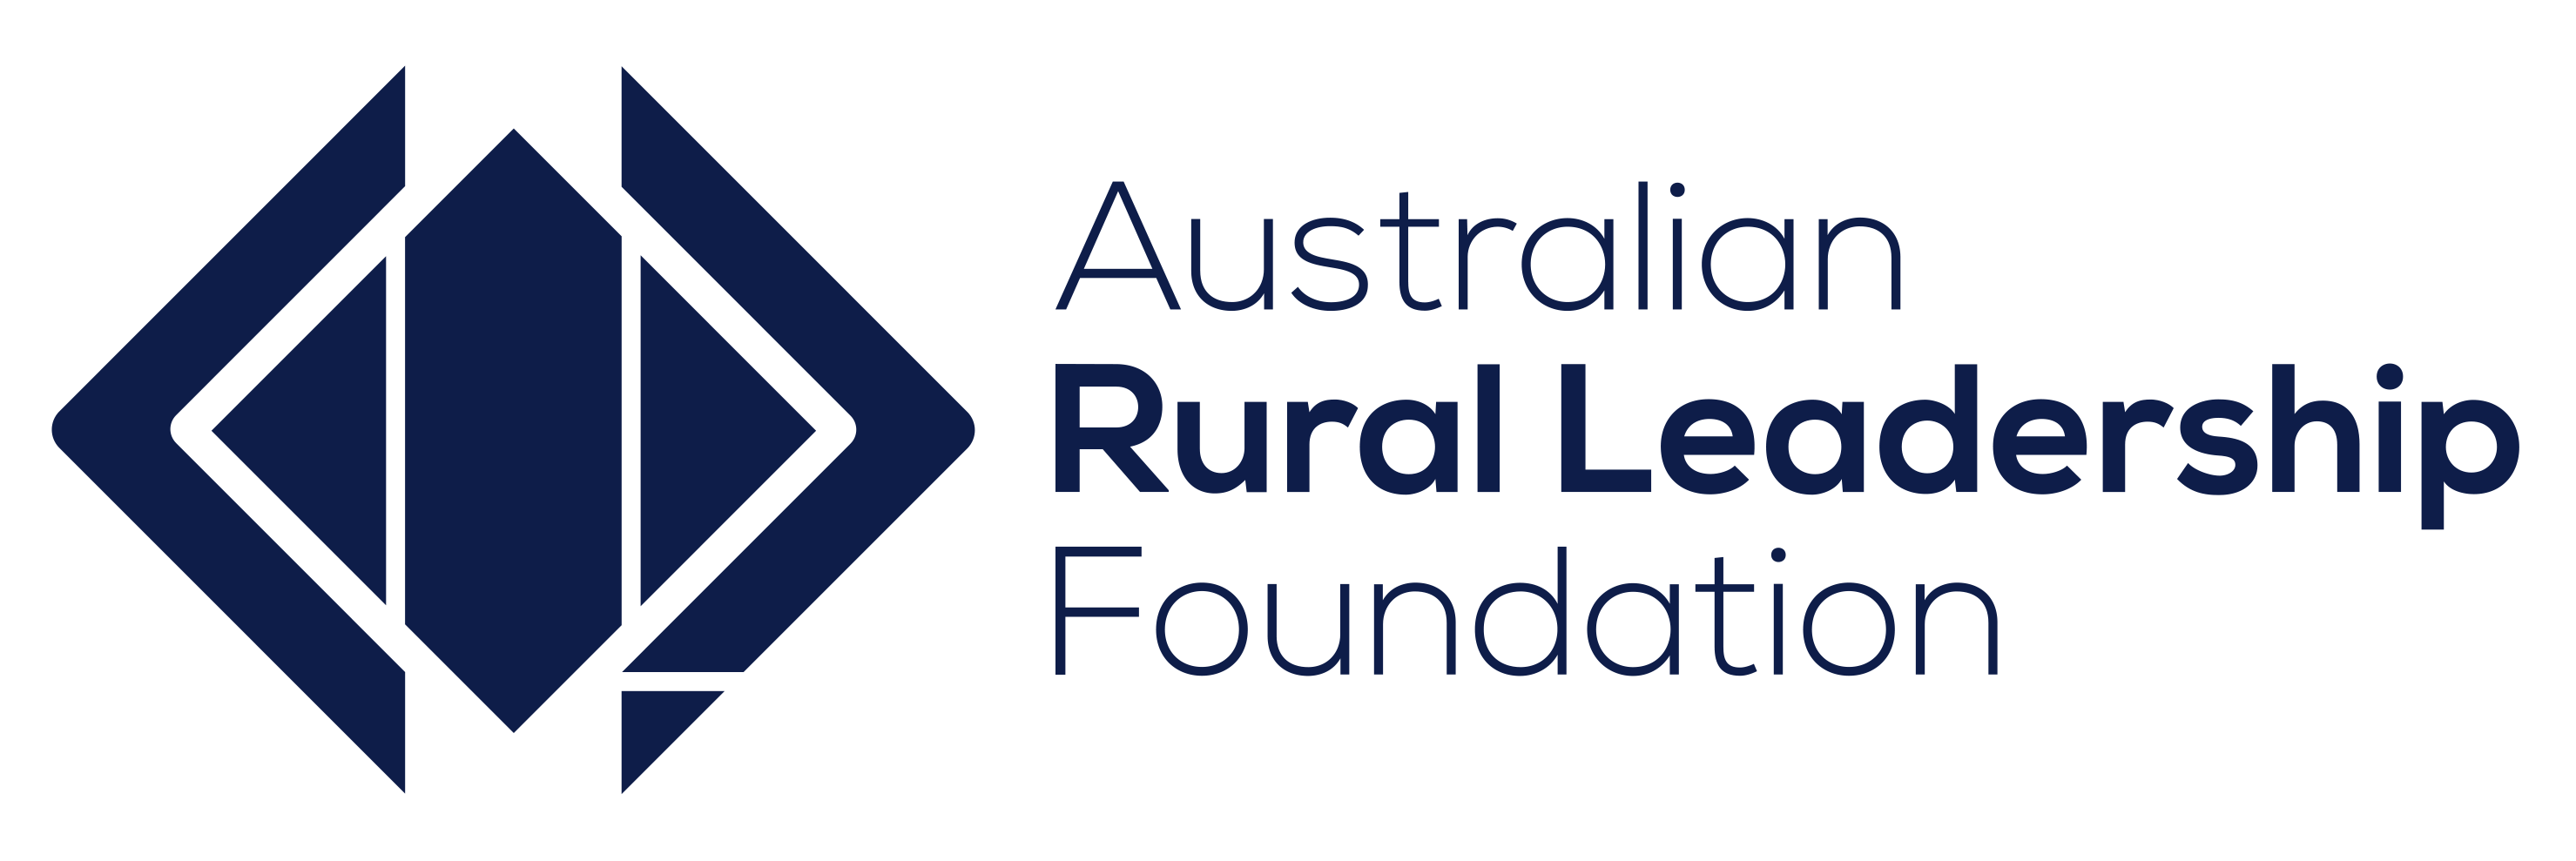 Application Portal - Australian Rural Leadership Foundation logo